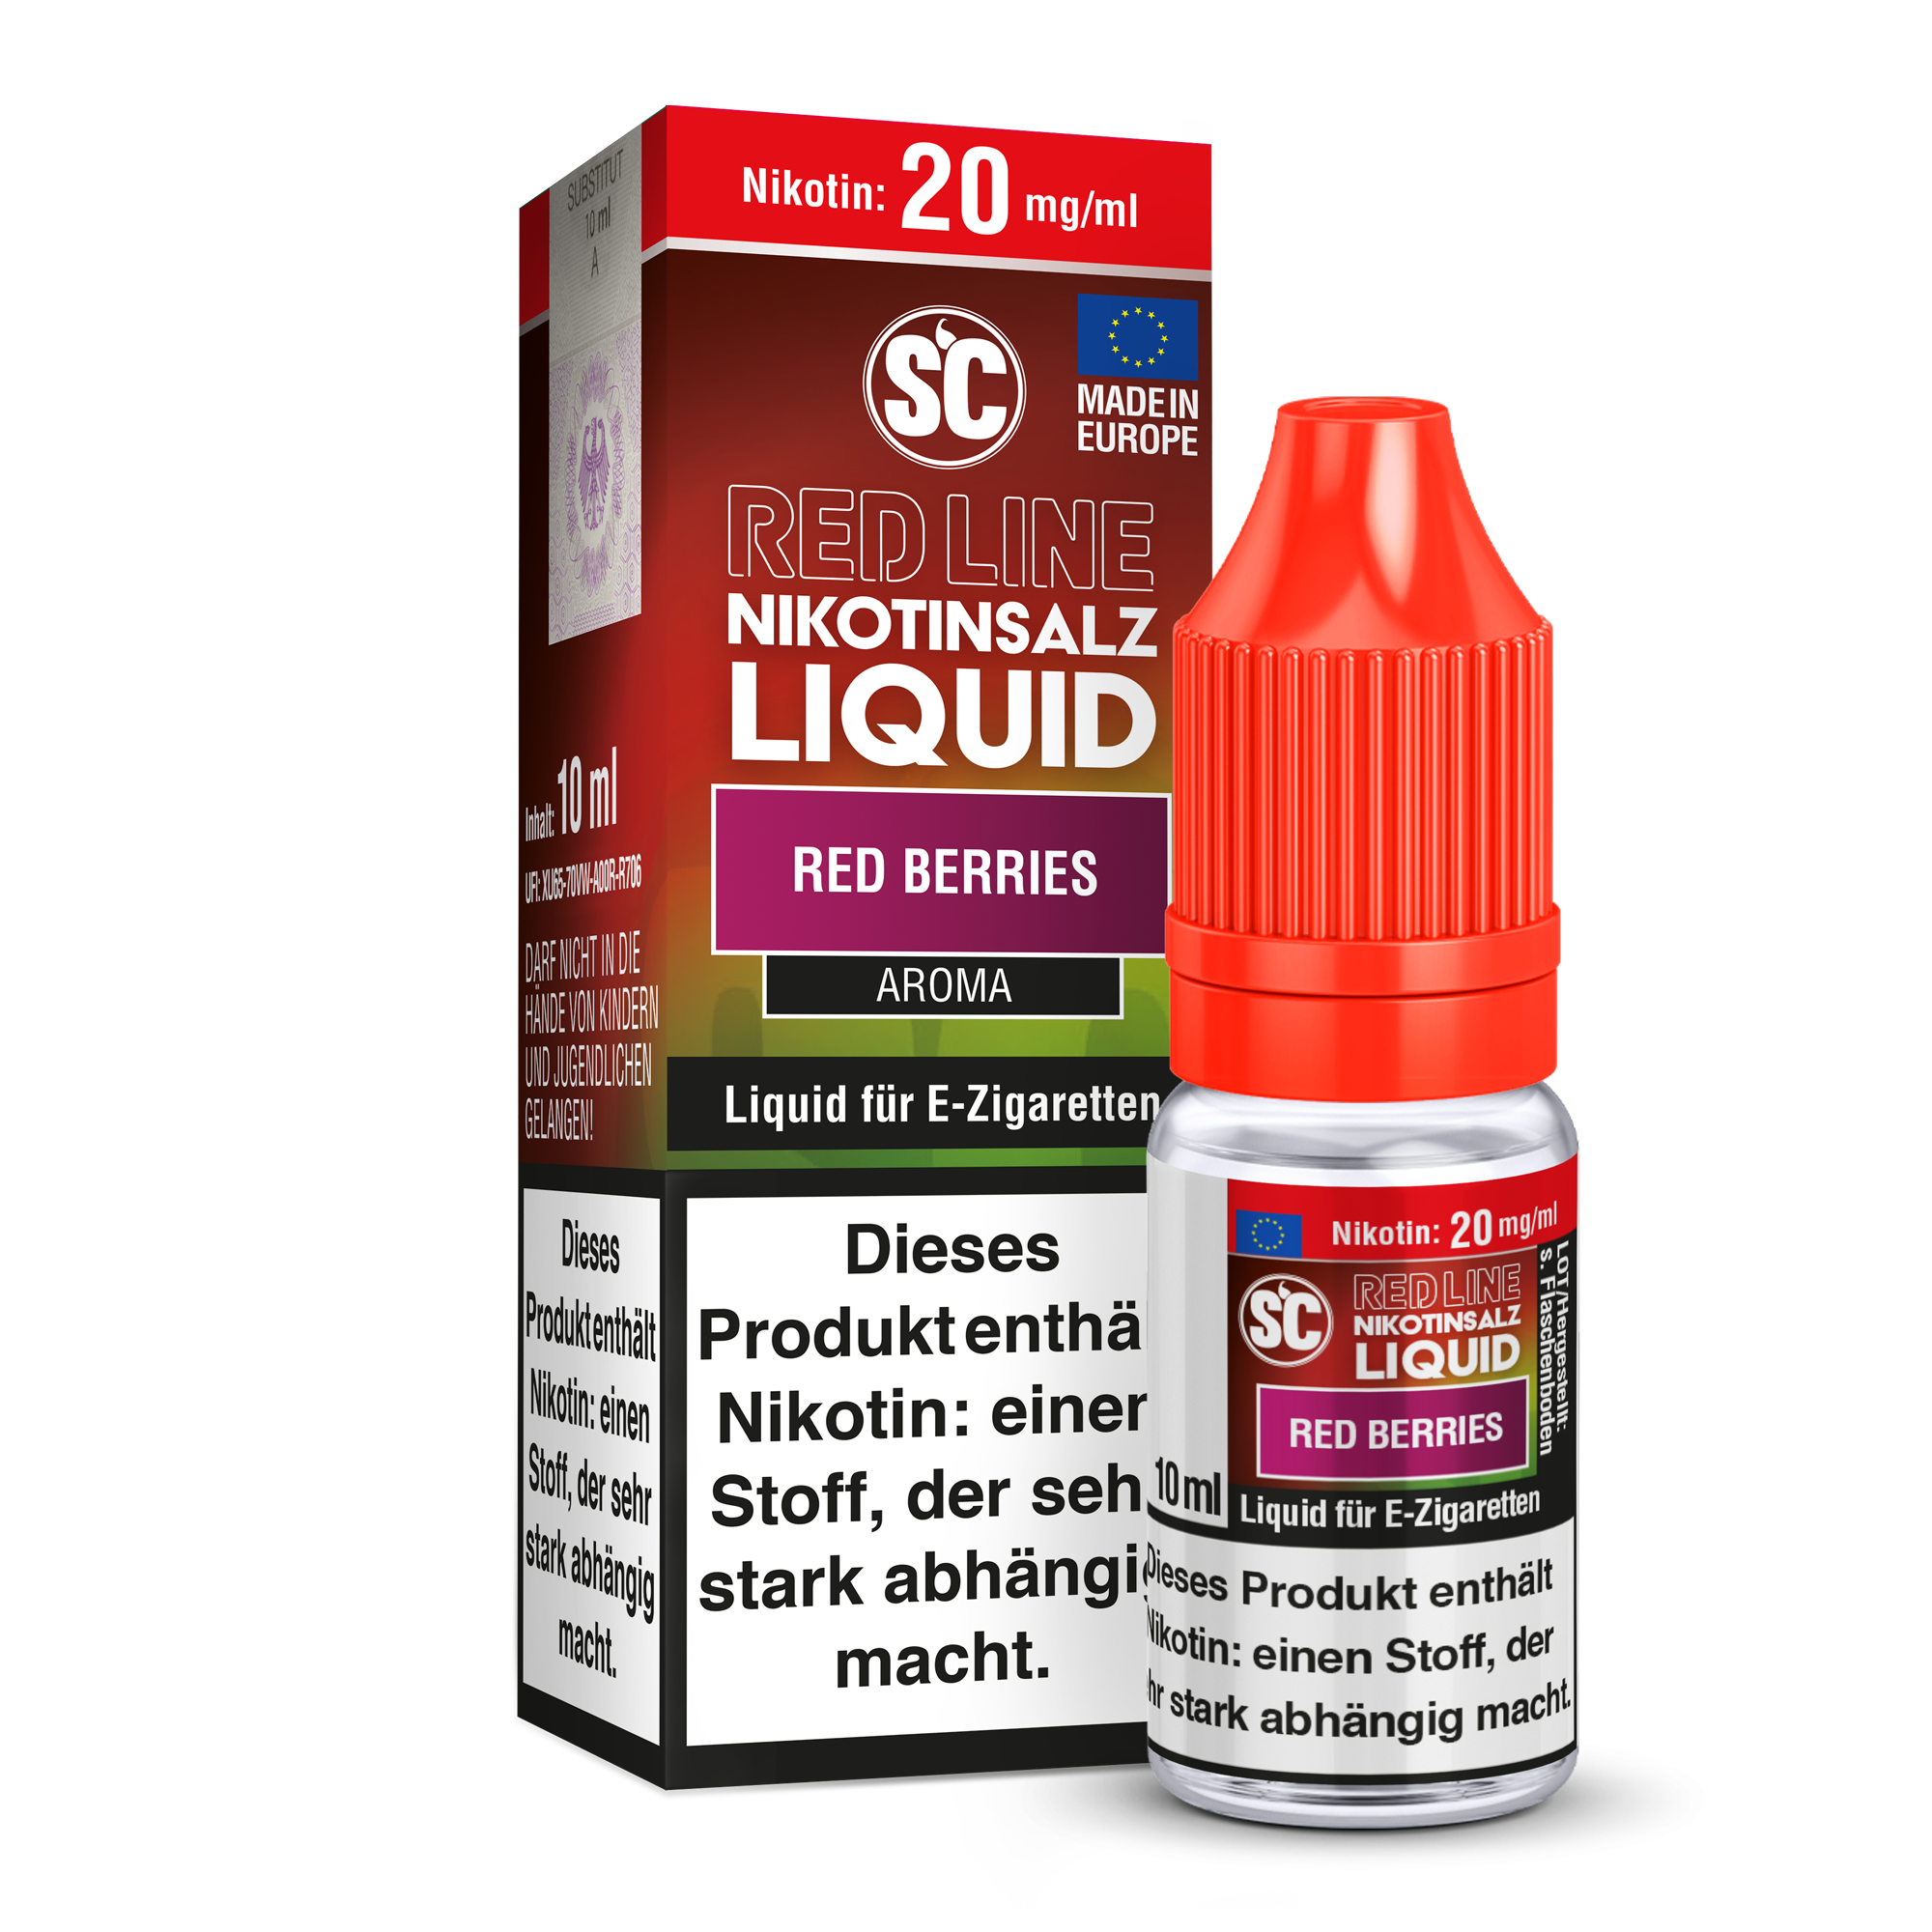 SC-RED LINE Red Berries - Nikotinsalz Liquid 20 mg/ml